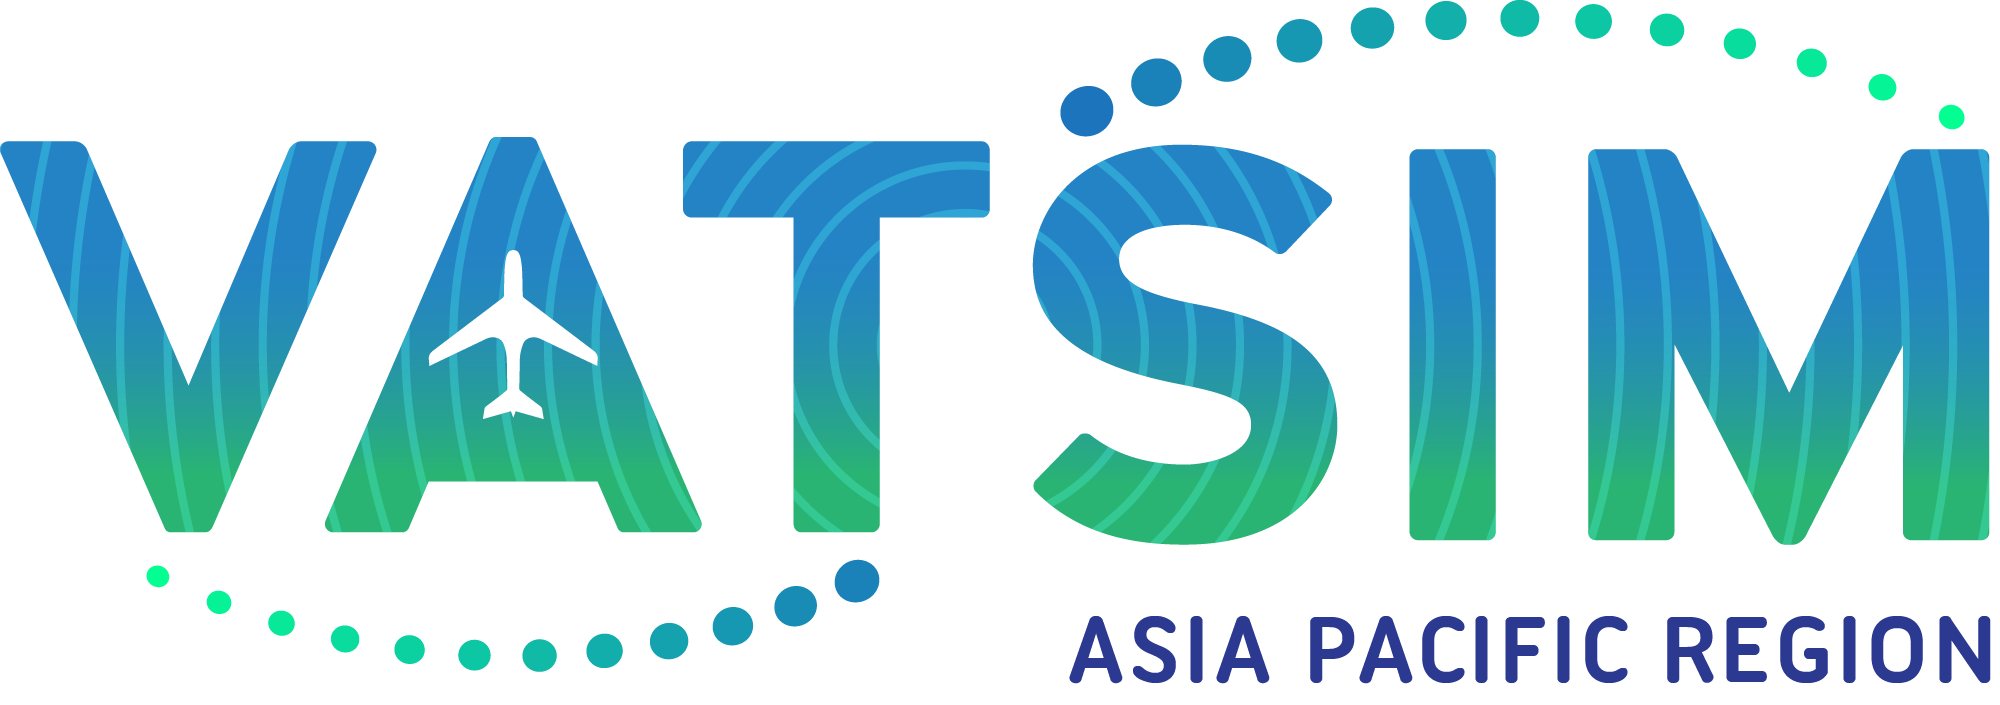 VATSIM Asia Pacific Helpdesk